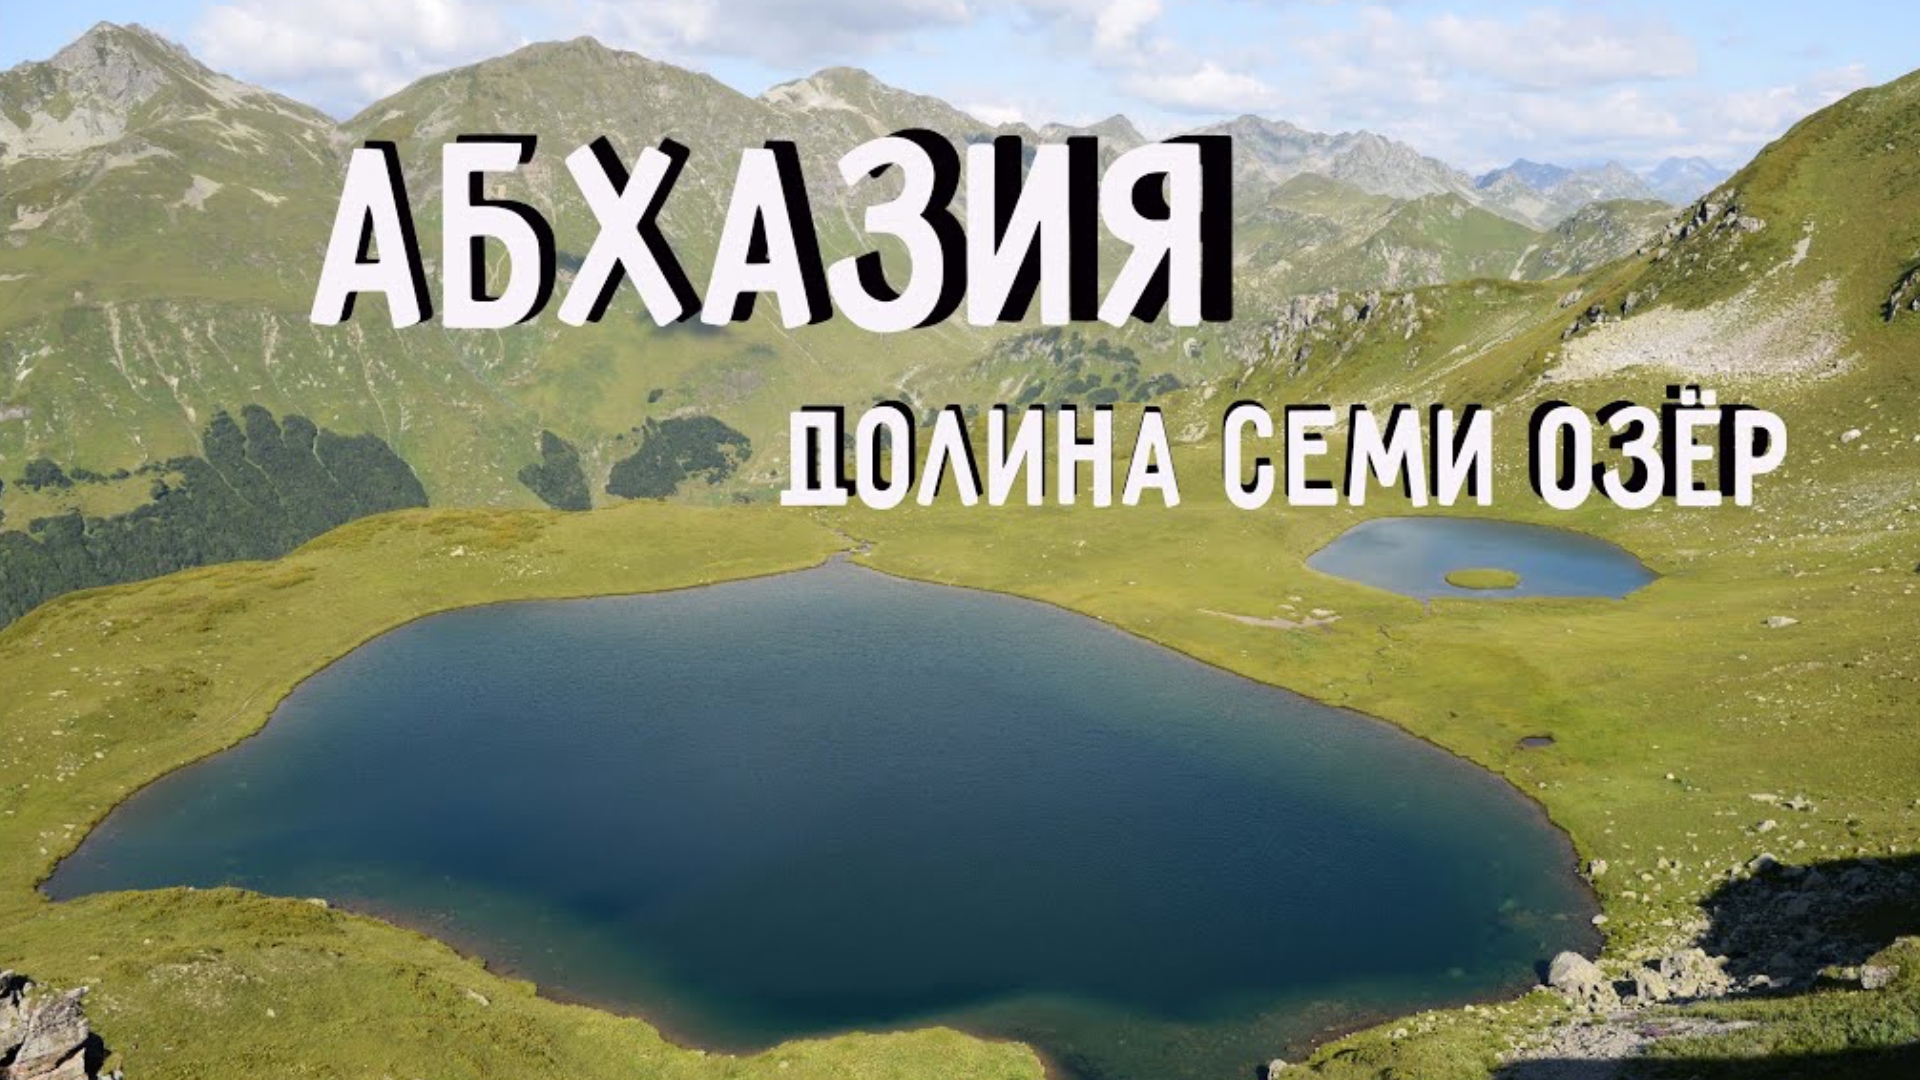 Озеро Рица Абхазия Долина семи озер поход